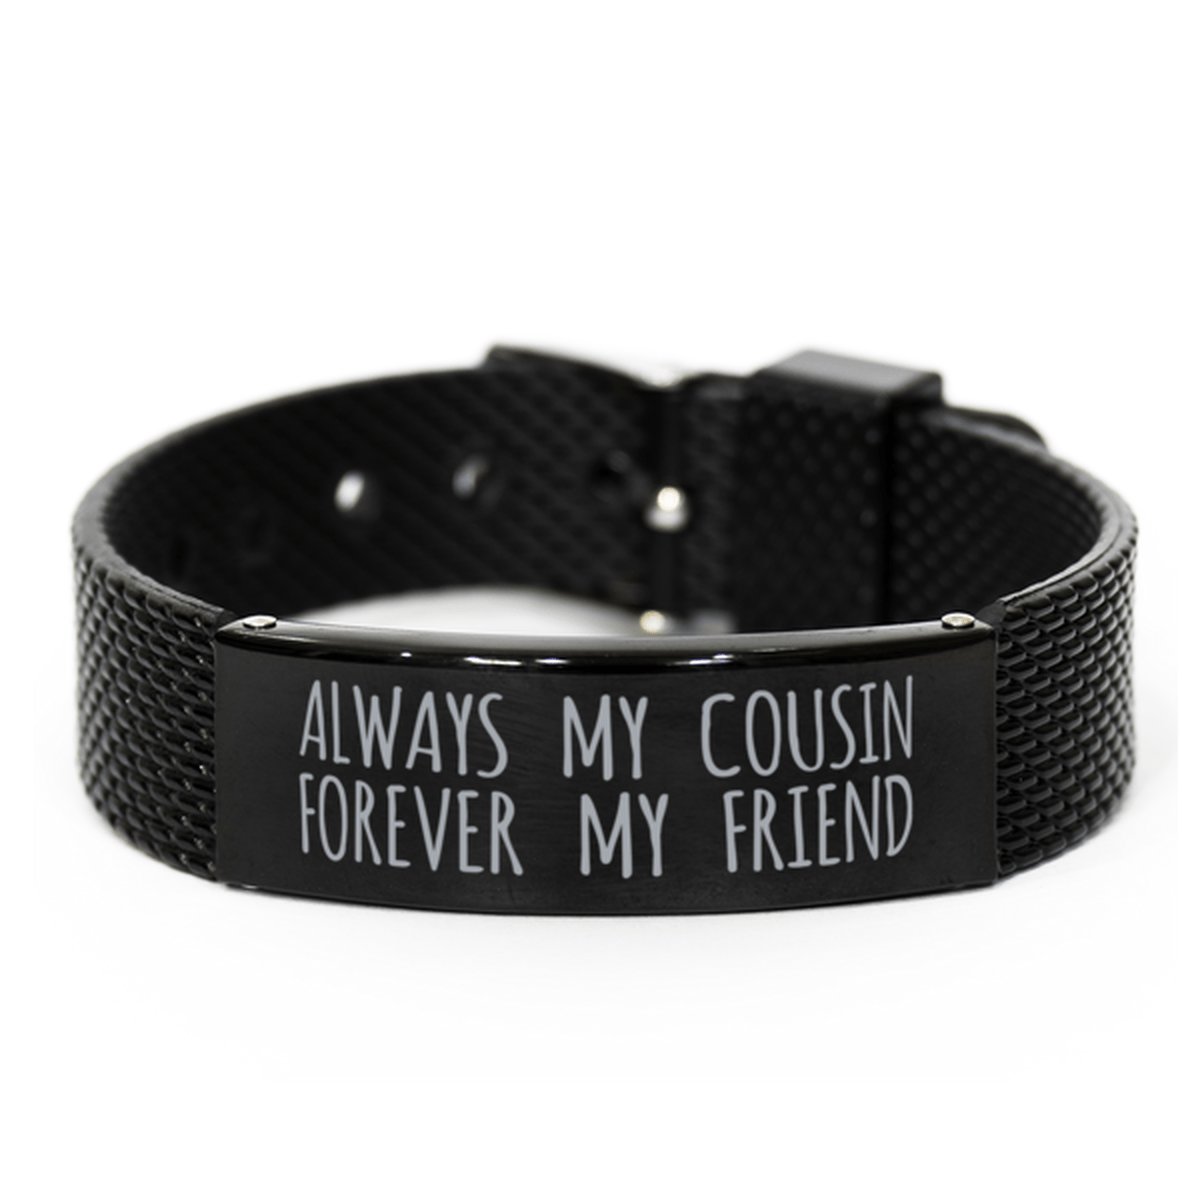 Inspirational Cousin Black Shark Mesh Bracelet, Always My Cousin Forever My Friend, Best Birthday Gifts for Family Friends